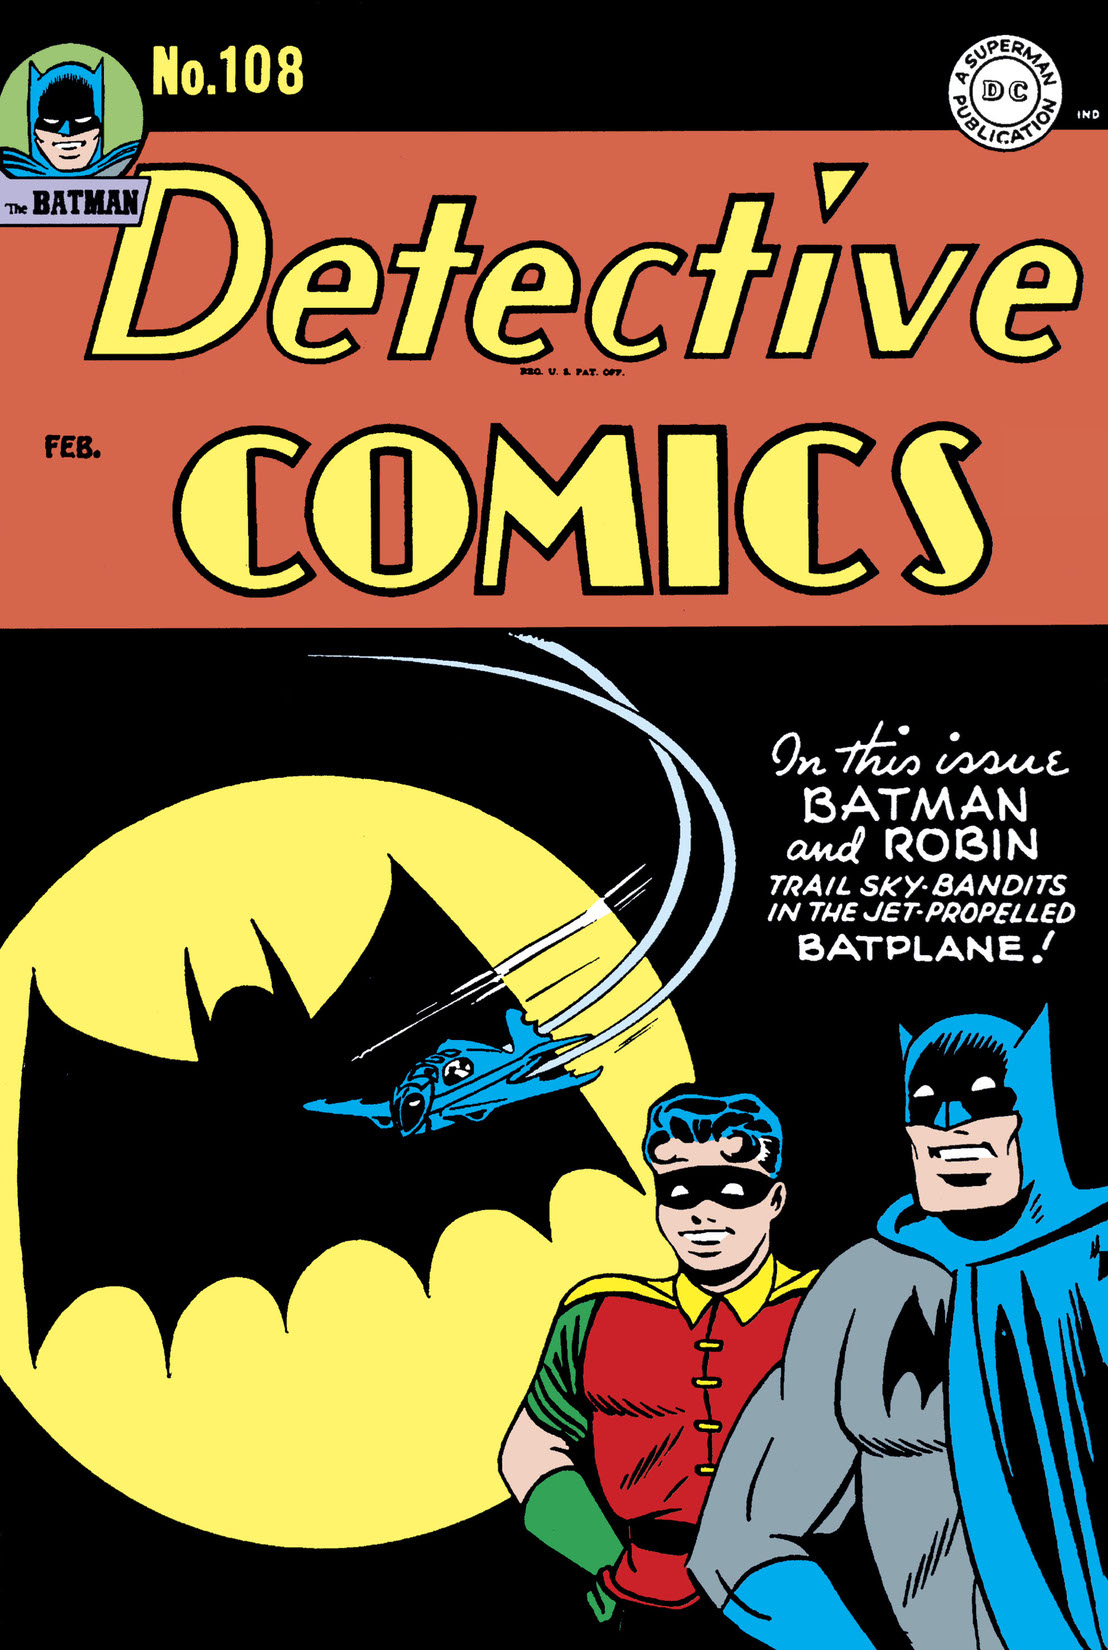 Detective Comics (1937-) #108 preview images